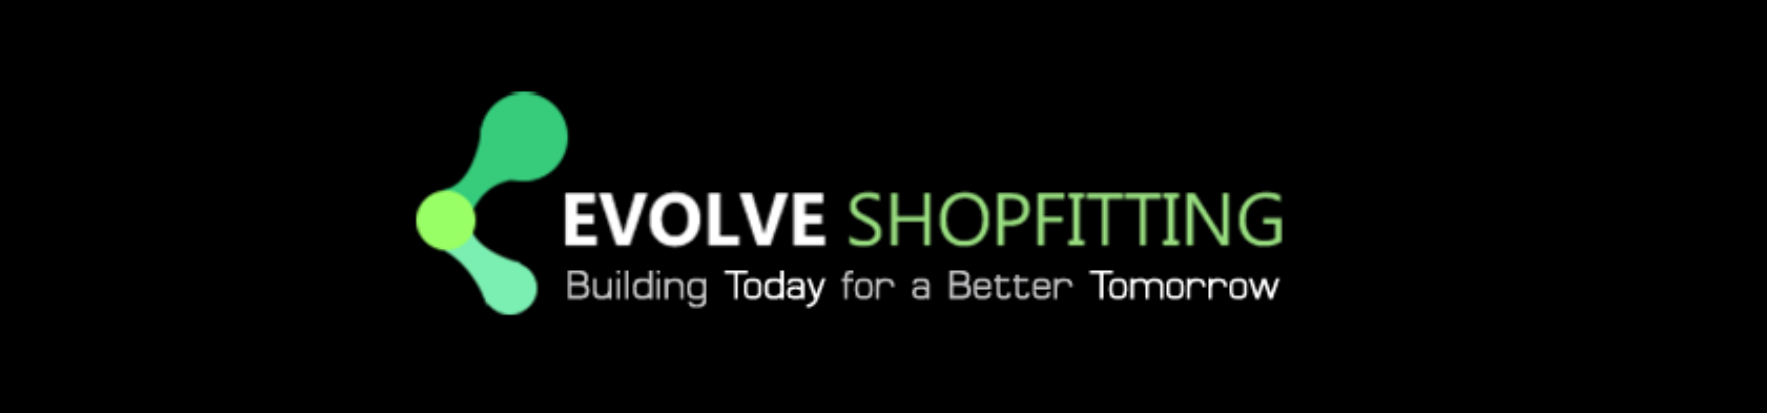 Main image for Evolve Shopfitting